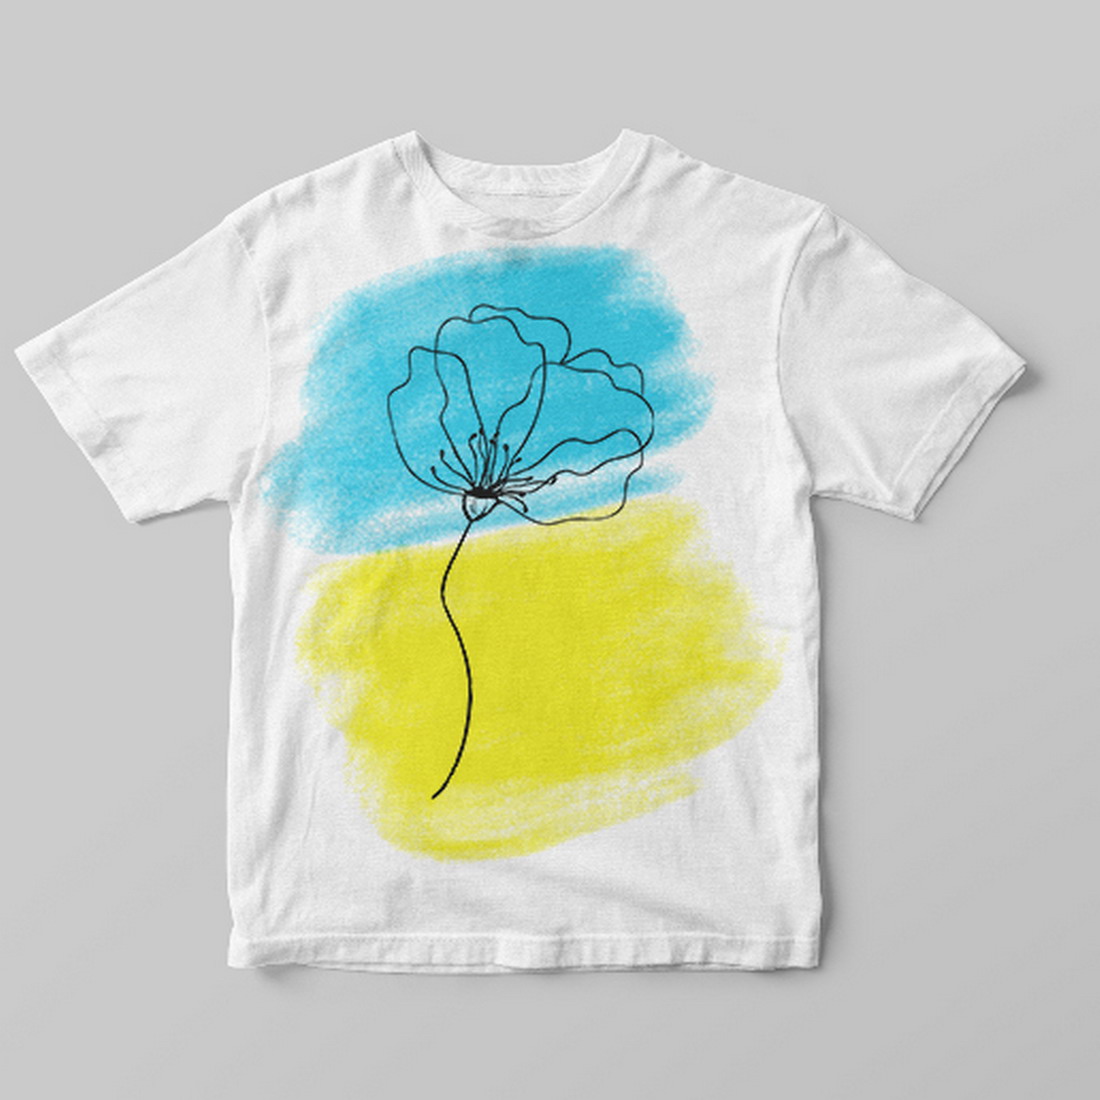 Flowers of Ukraine on t-shirt.